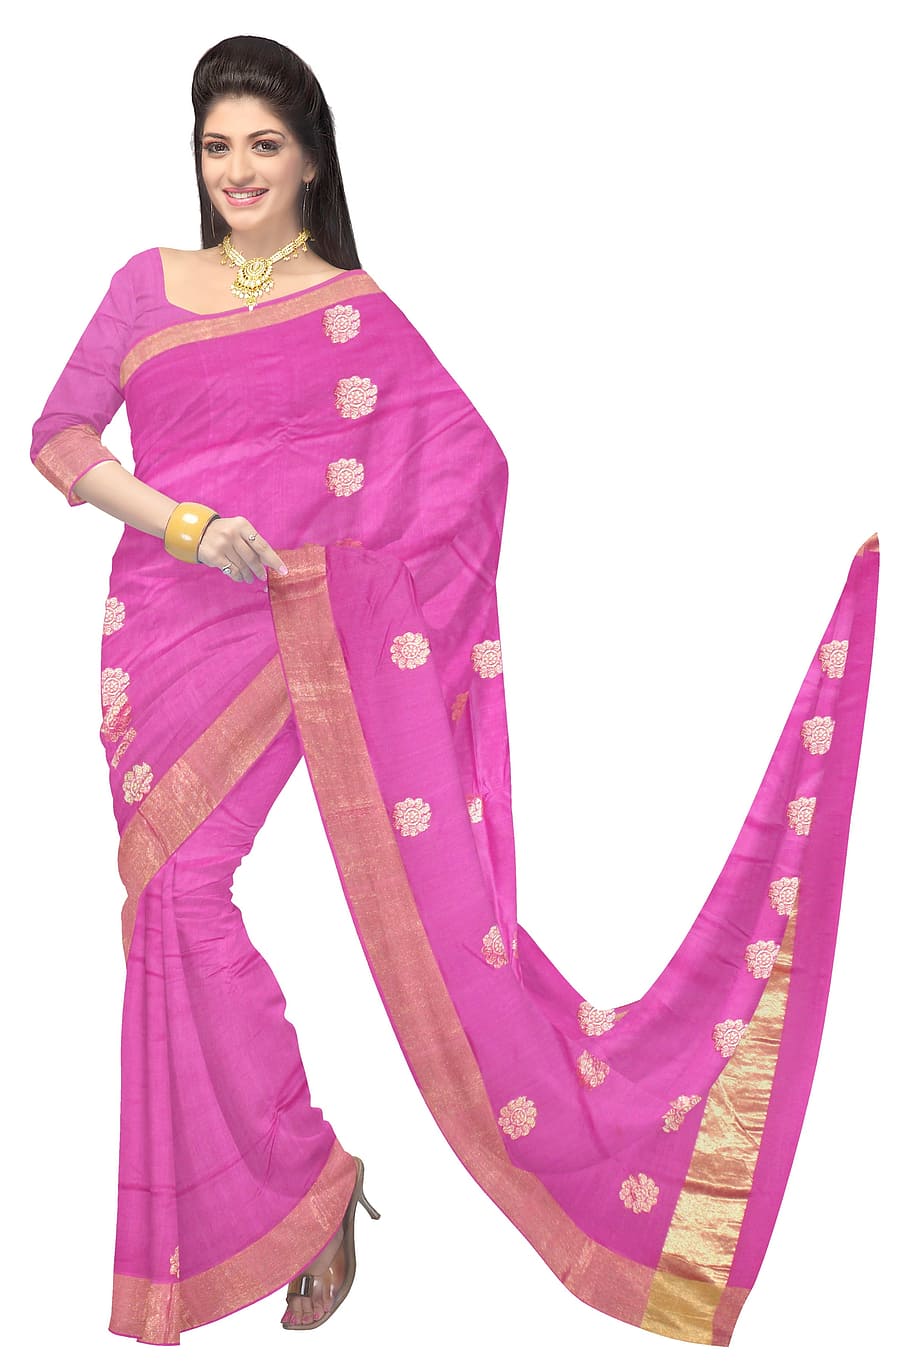 Saree, Fashion, Silk, Dress, Woman, model, clothing, indian, cotton, sari